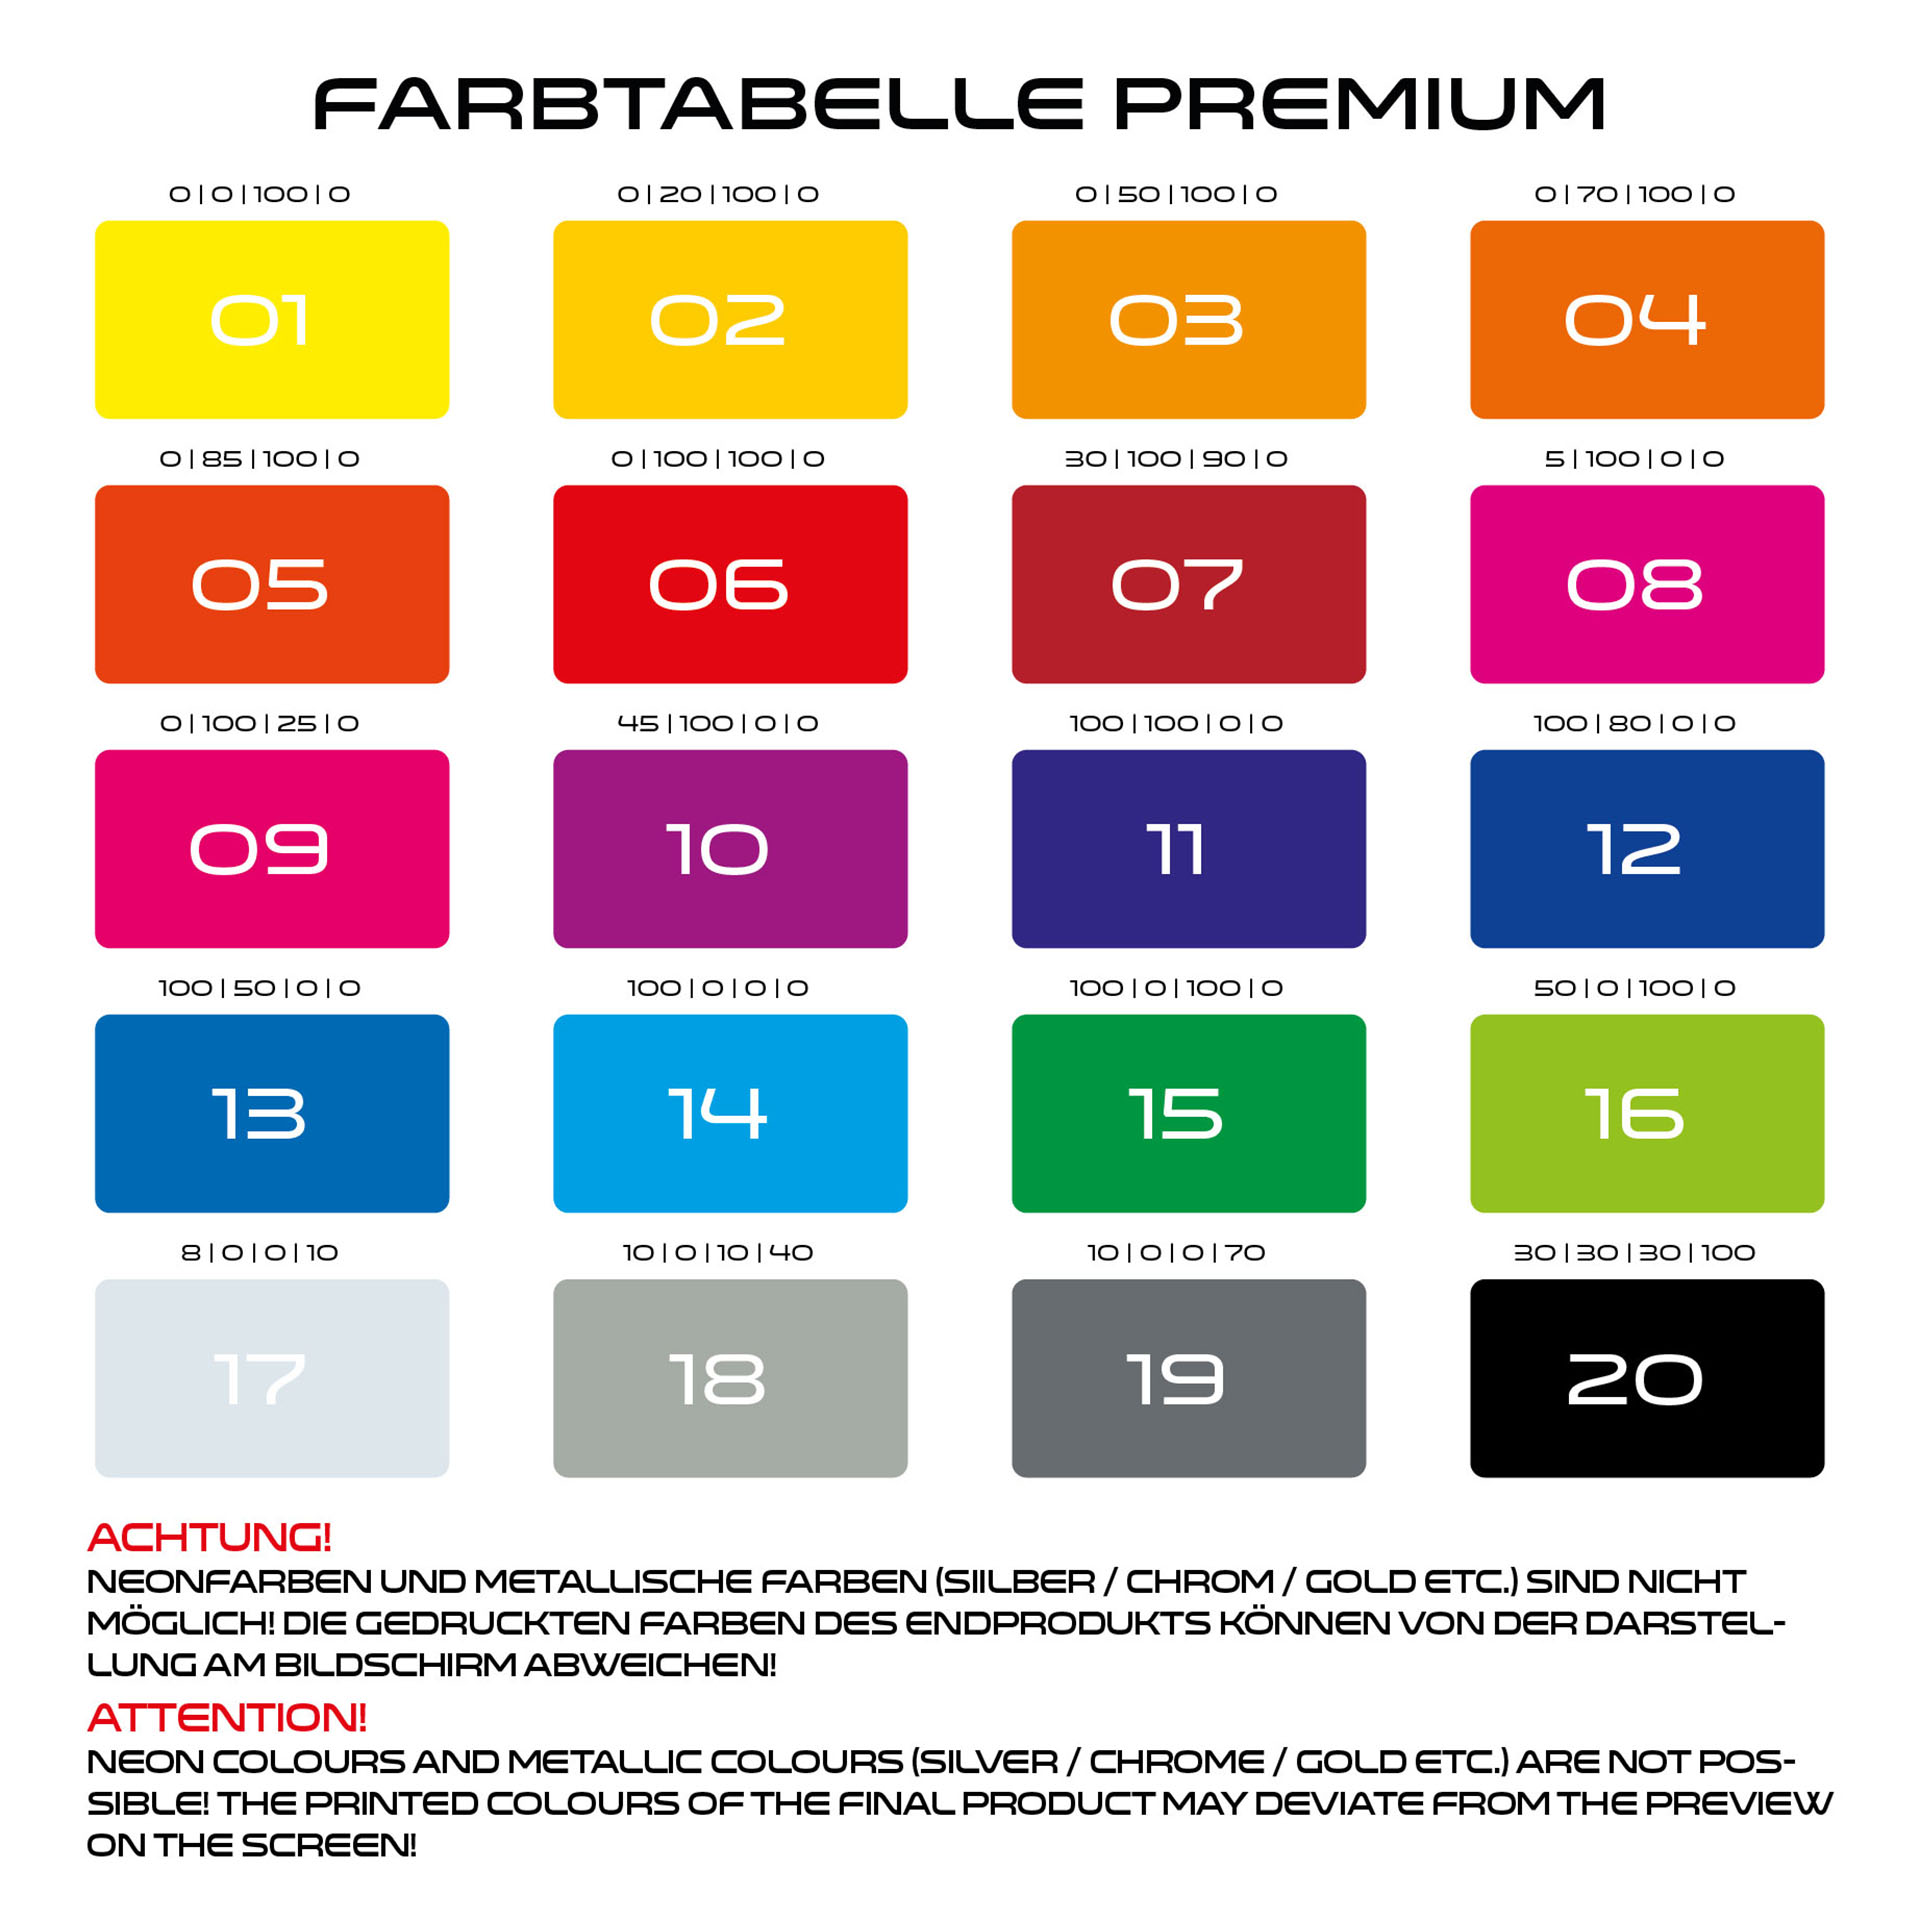 Cafe racer Felgenaufkleber Premium Design Saw B Farbtabelle Premium Wheelsticker